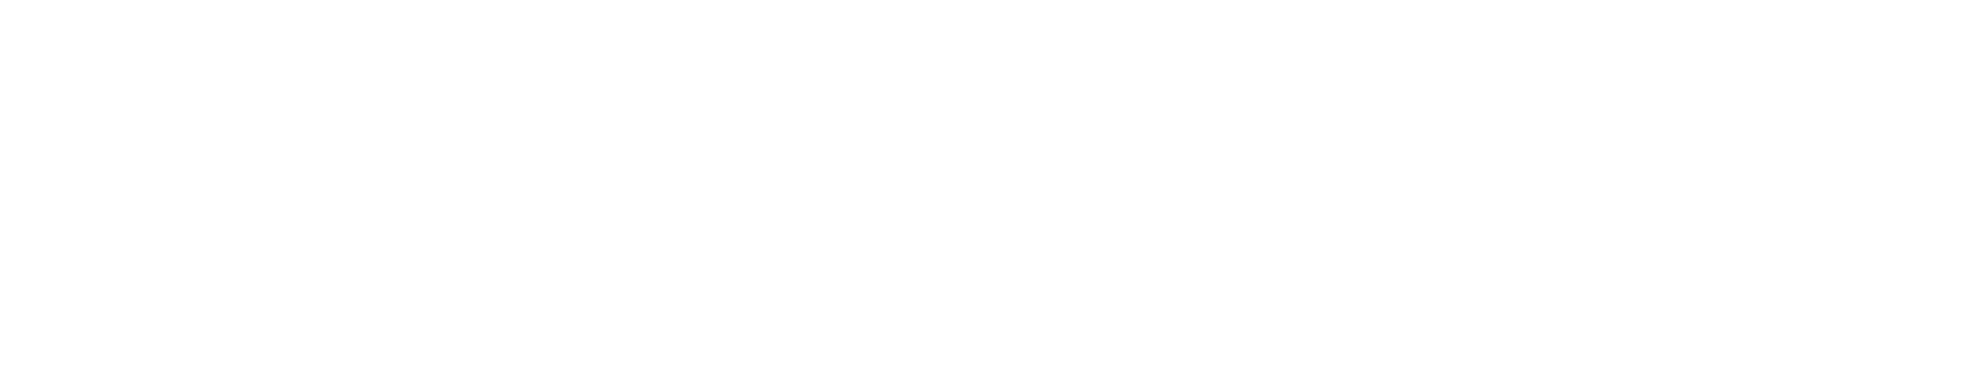 les logos 1/8, 007, et Aston Martin